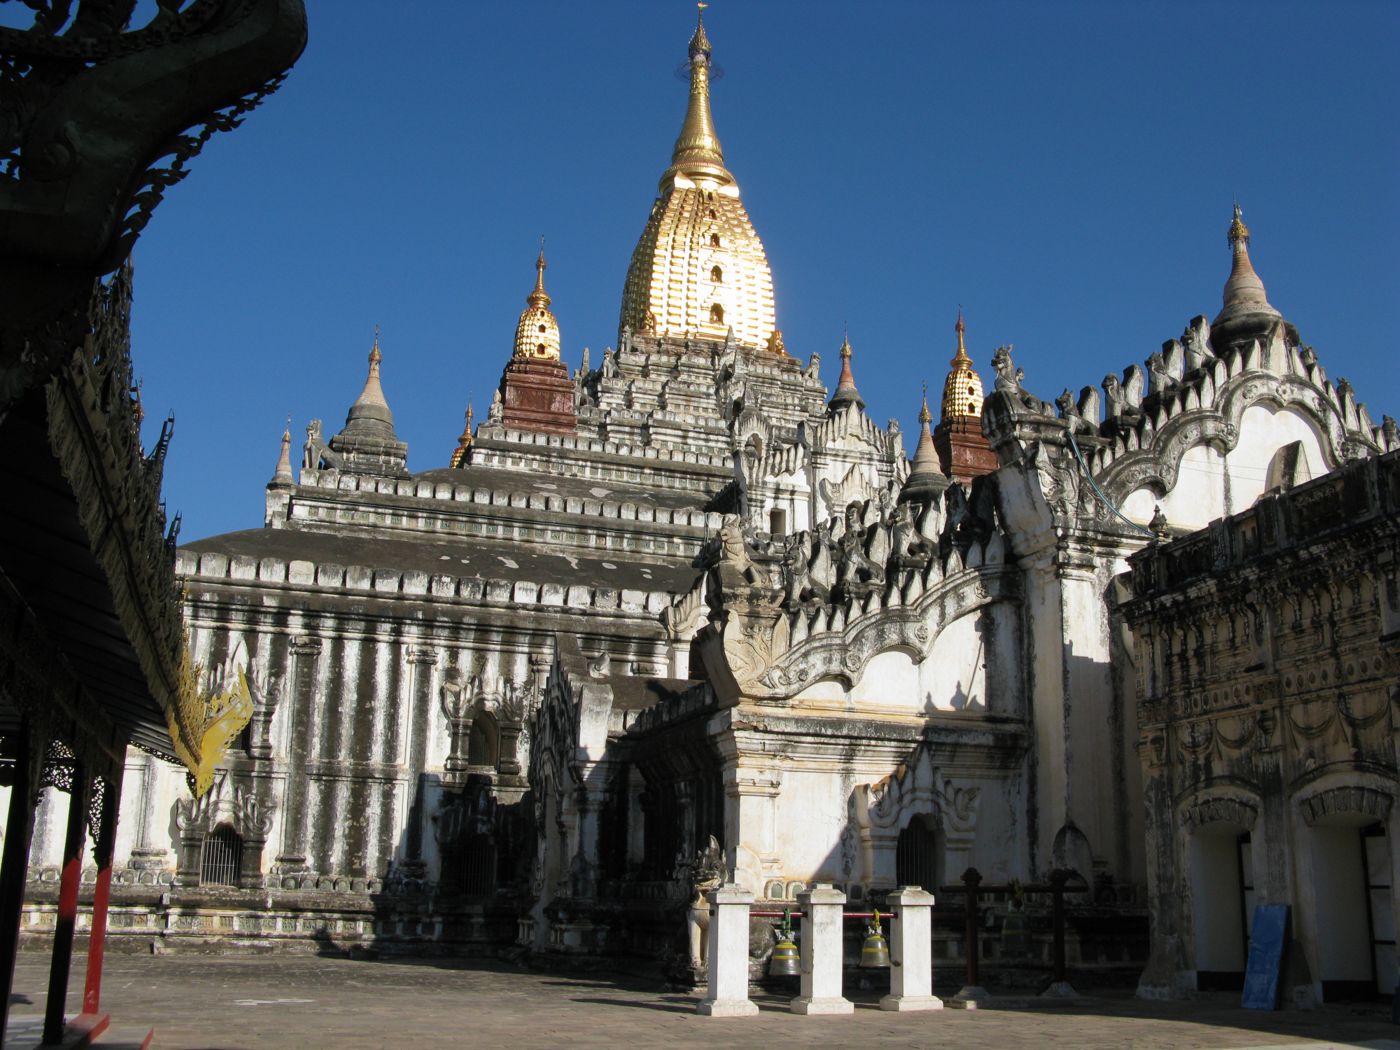 Bagan, the city of amazing temples in Myanmar